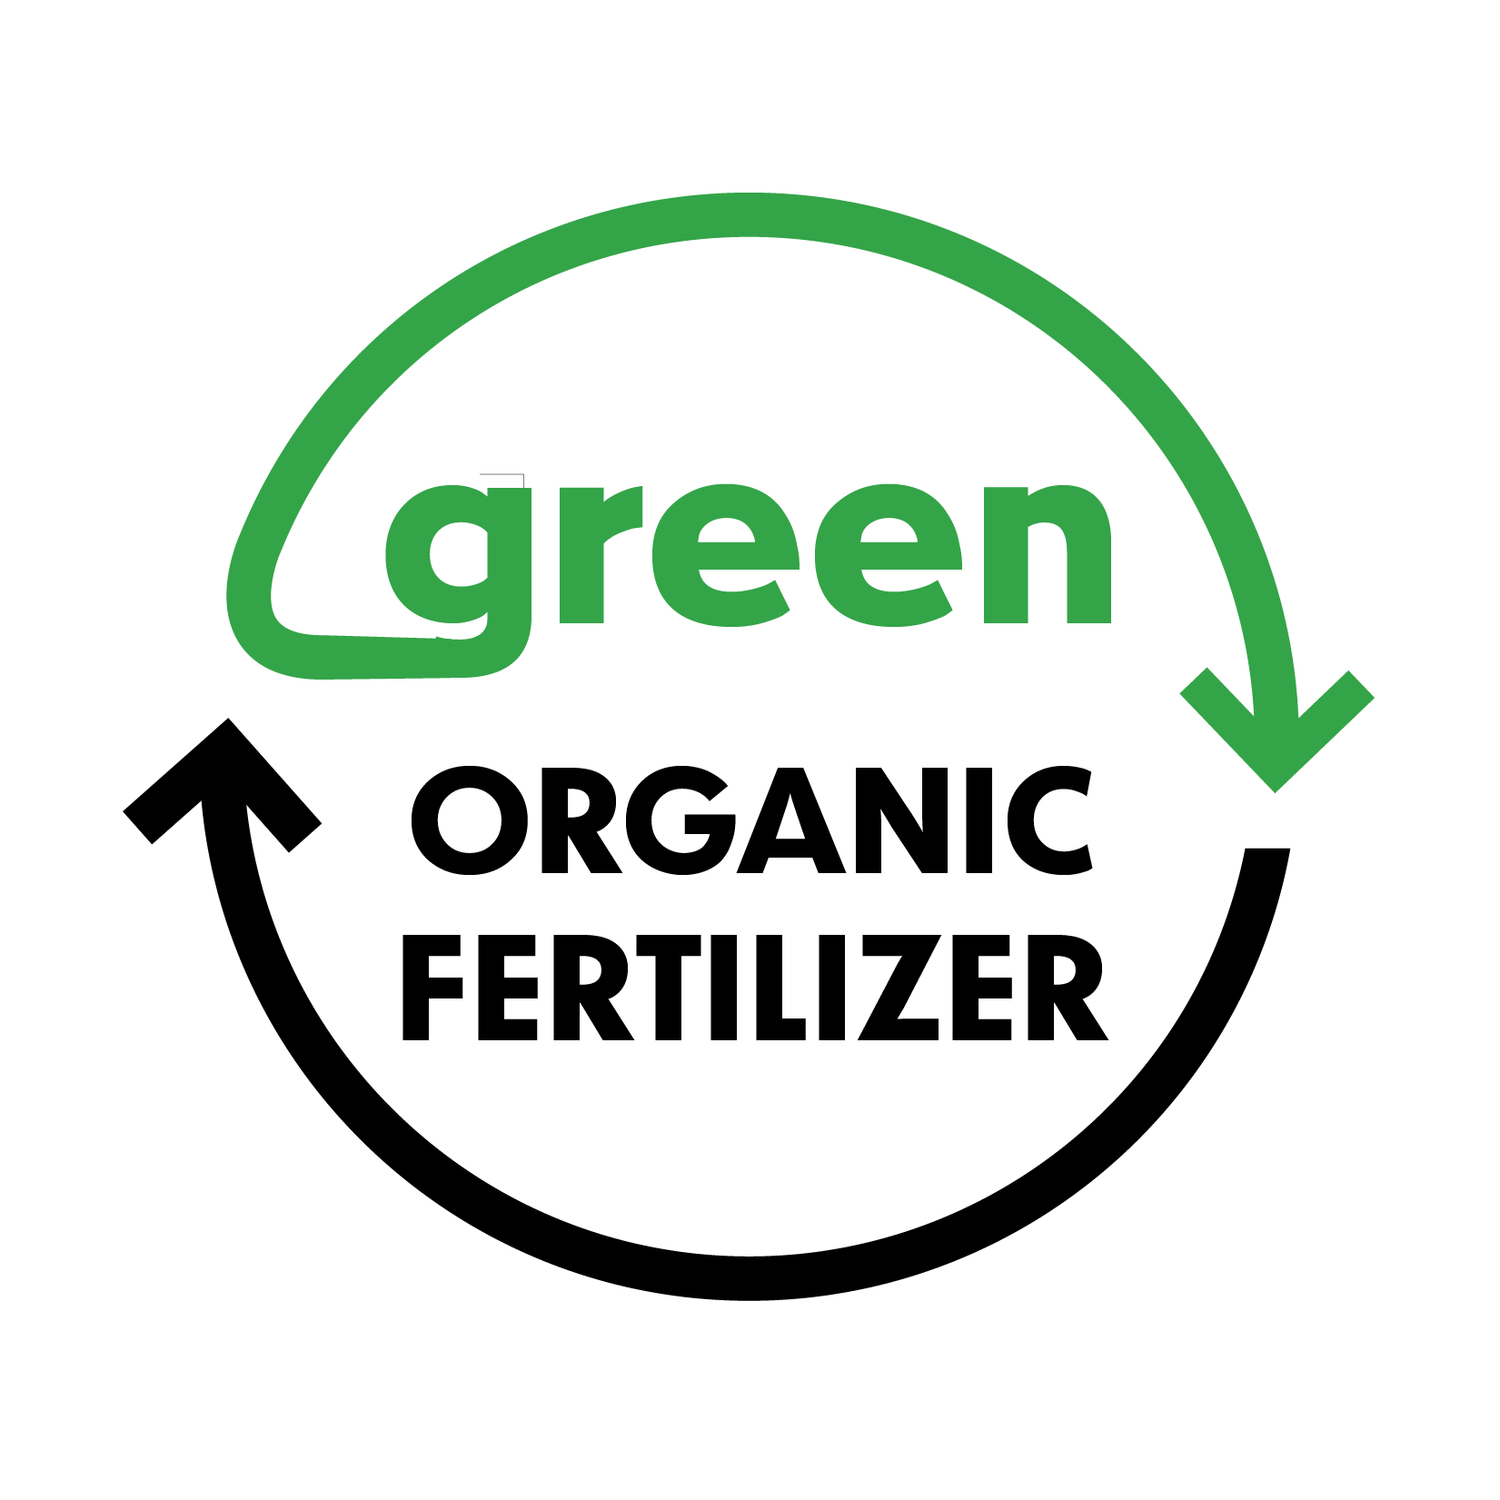 green organic fertilizer